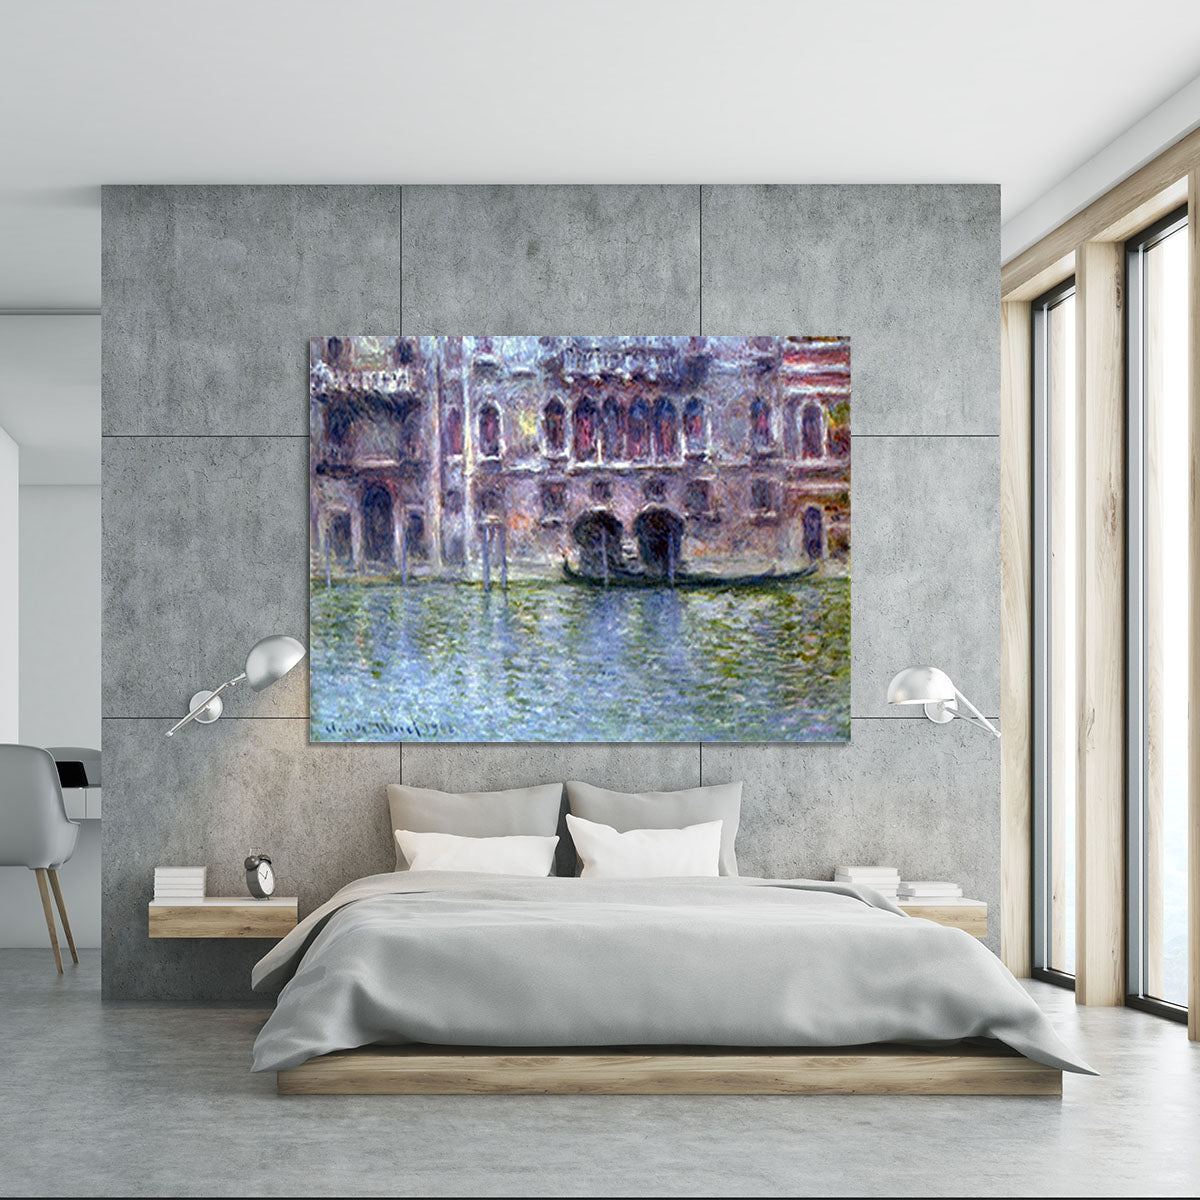 Palazzo da Mula Venice by Monet Canvas Print or Poster - Canvas Art Rocks - 5